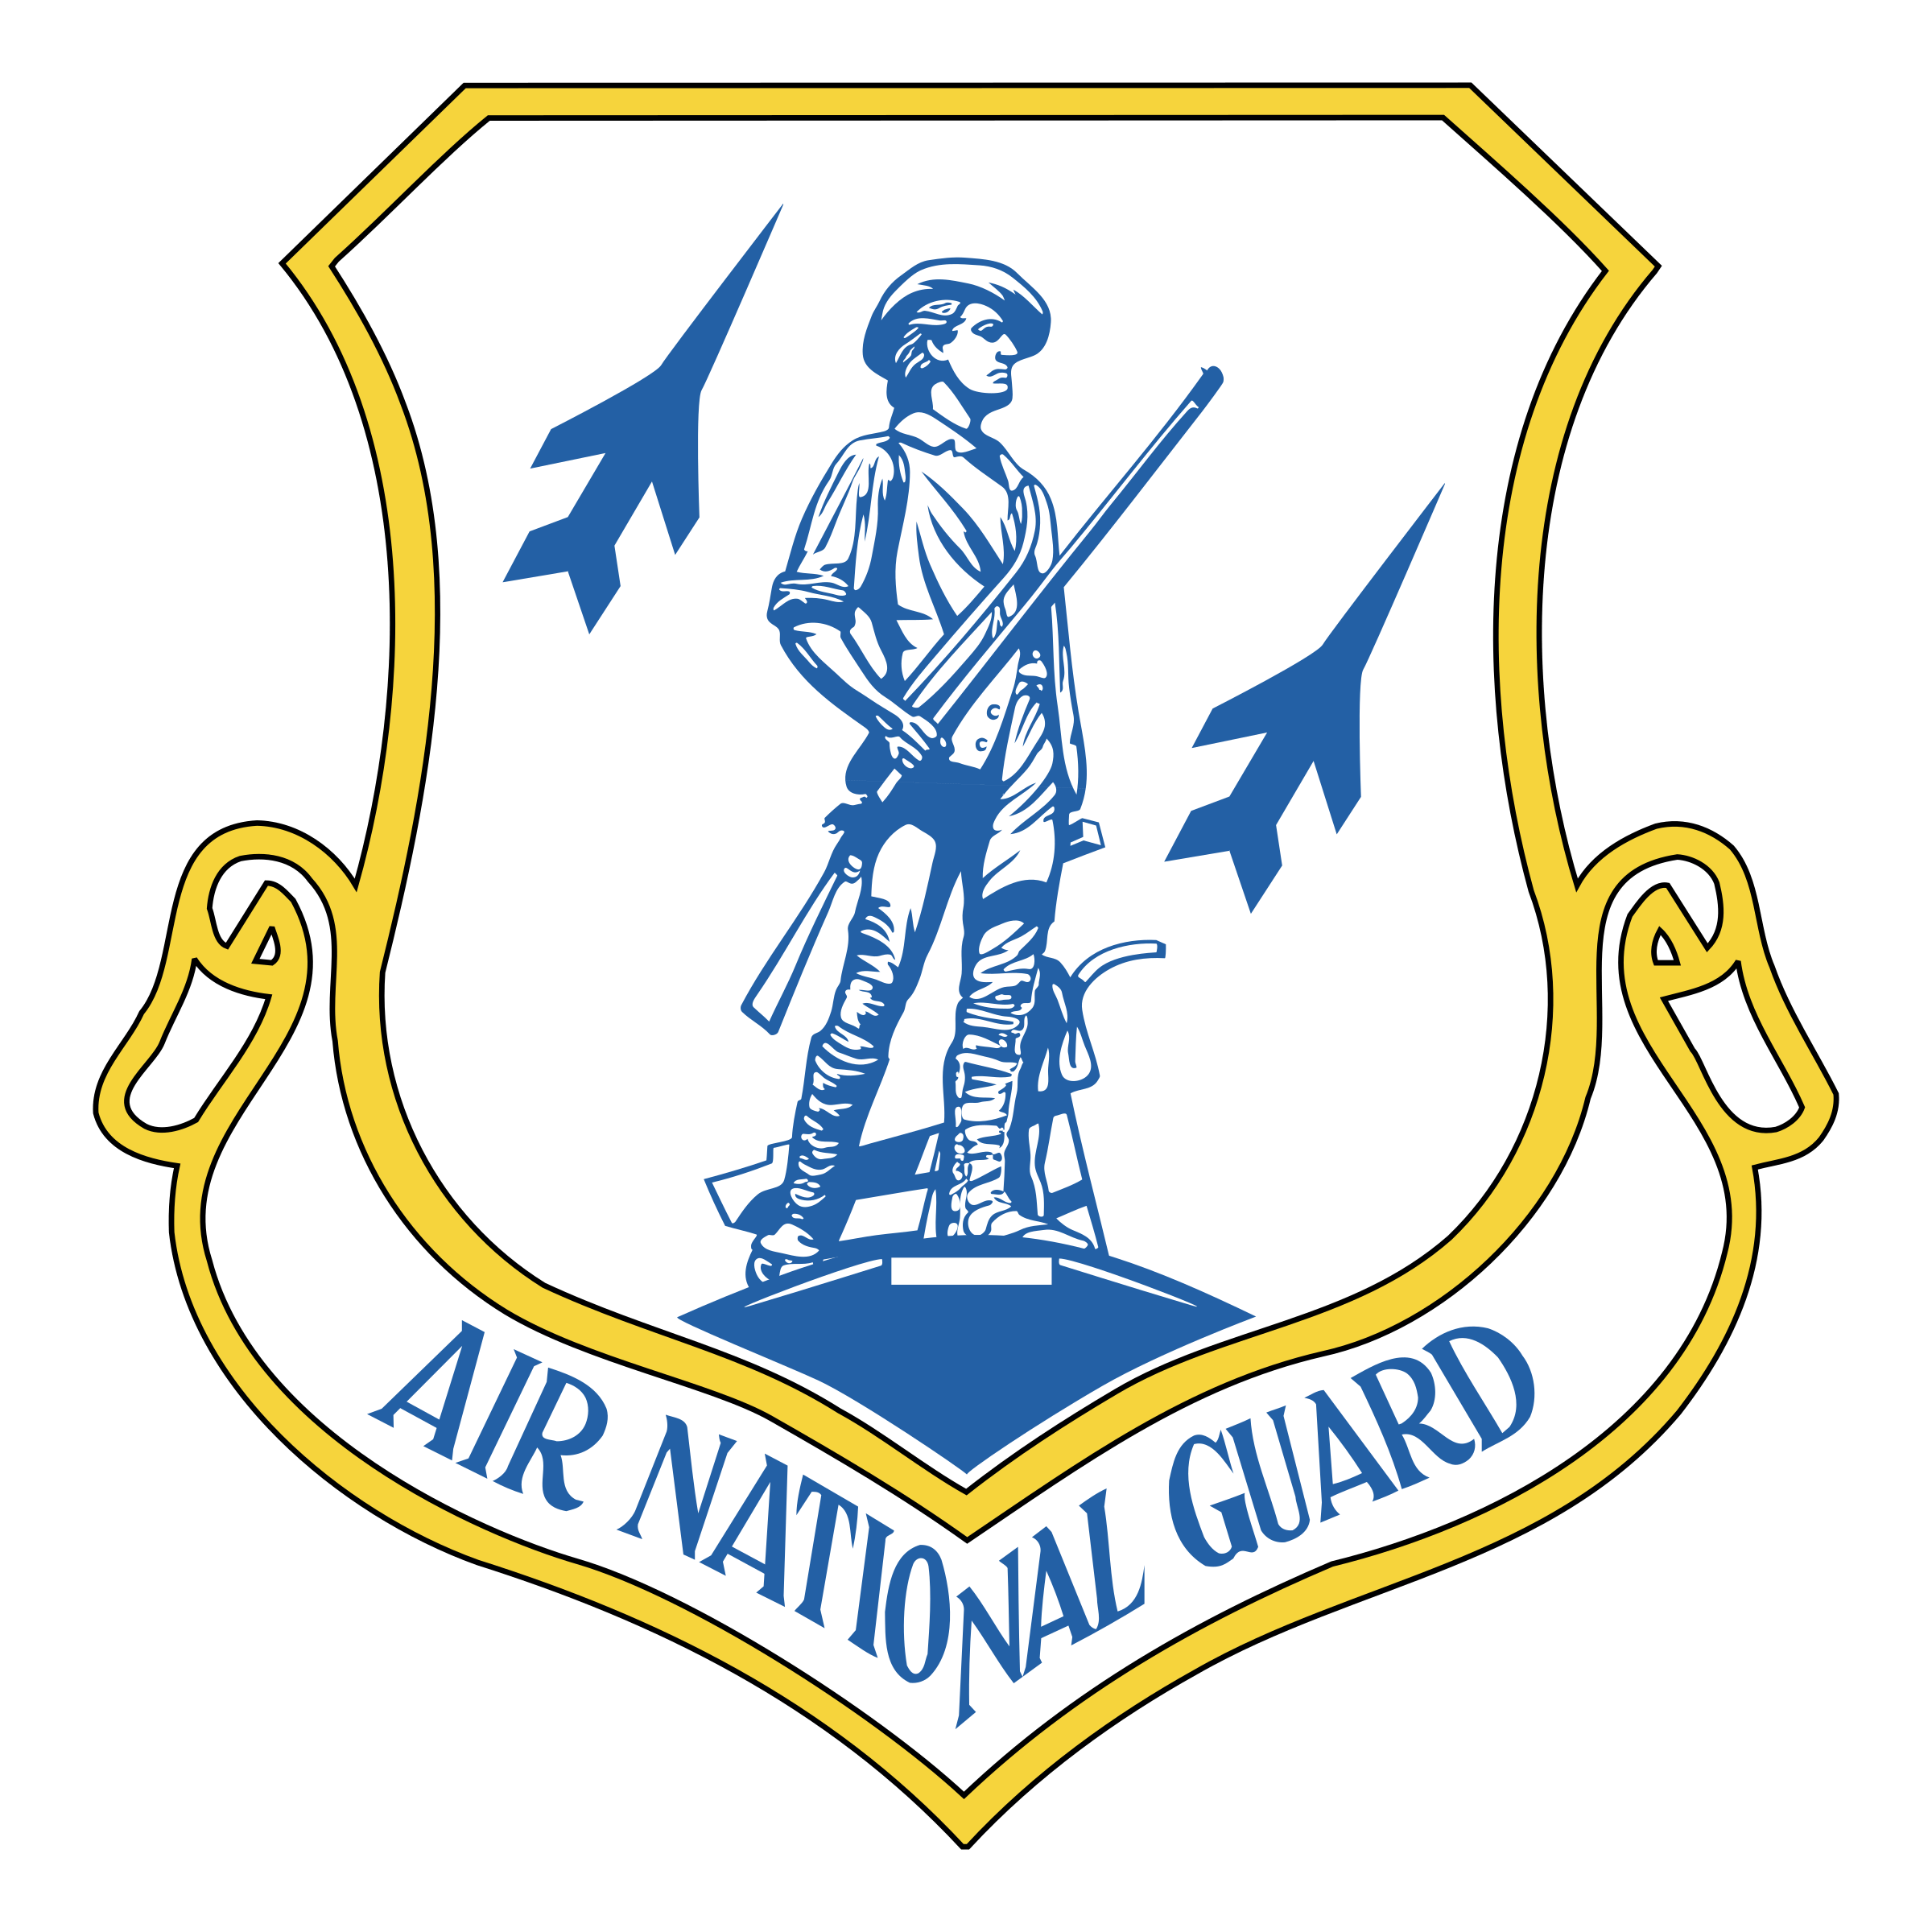 Air National Guard Logo - Air National Guard Logo PNG Transparent & SVG Vector - Freebie Supply